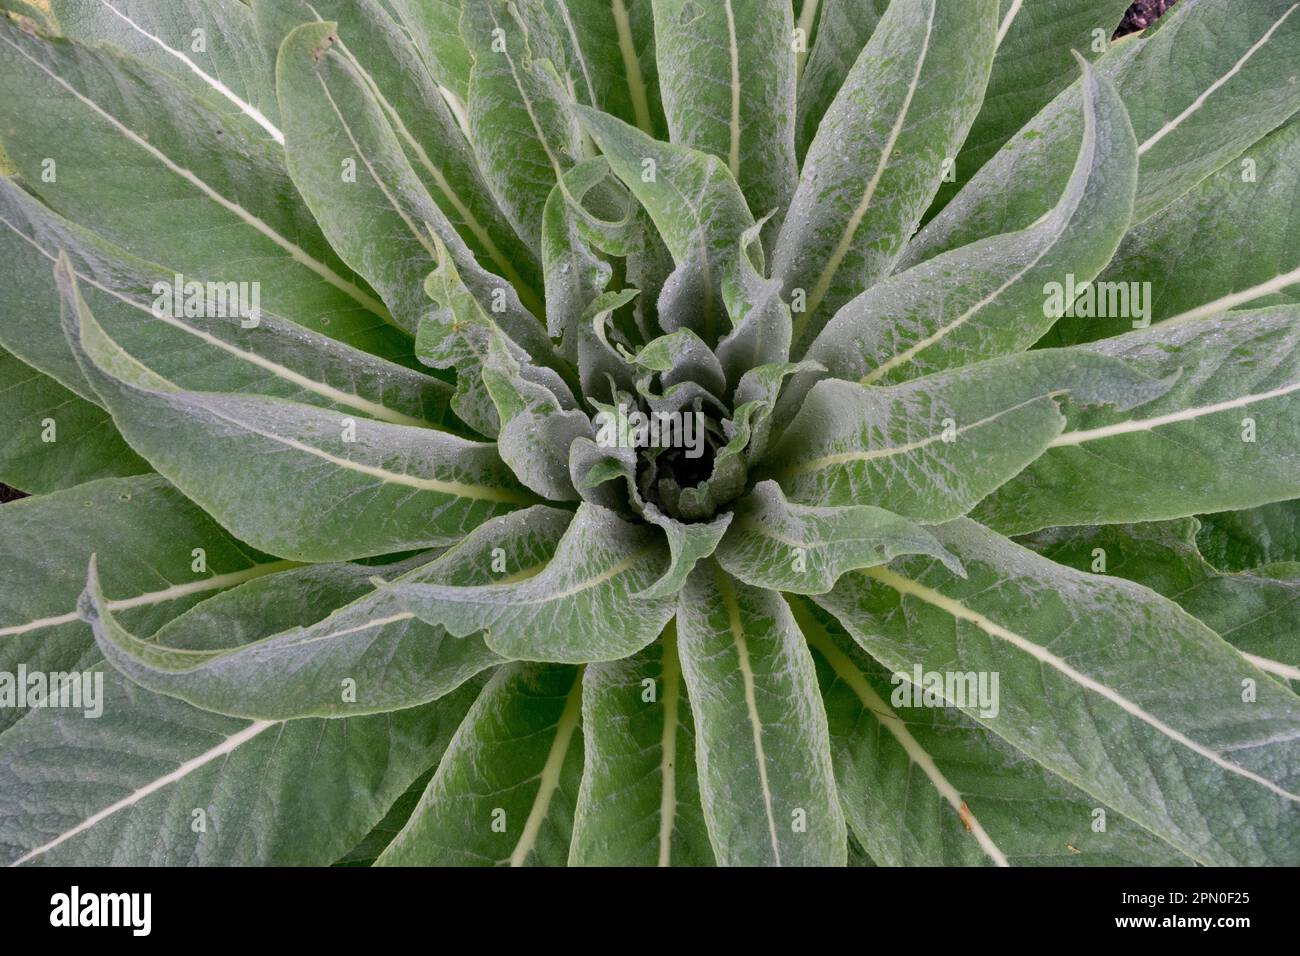 Rosette, Leaves, Hungarian Mullein, Verbascum speciosum, Showy Mullein Stock Photo